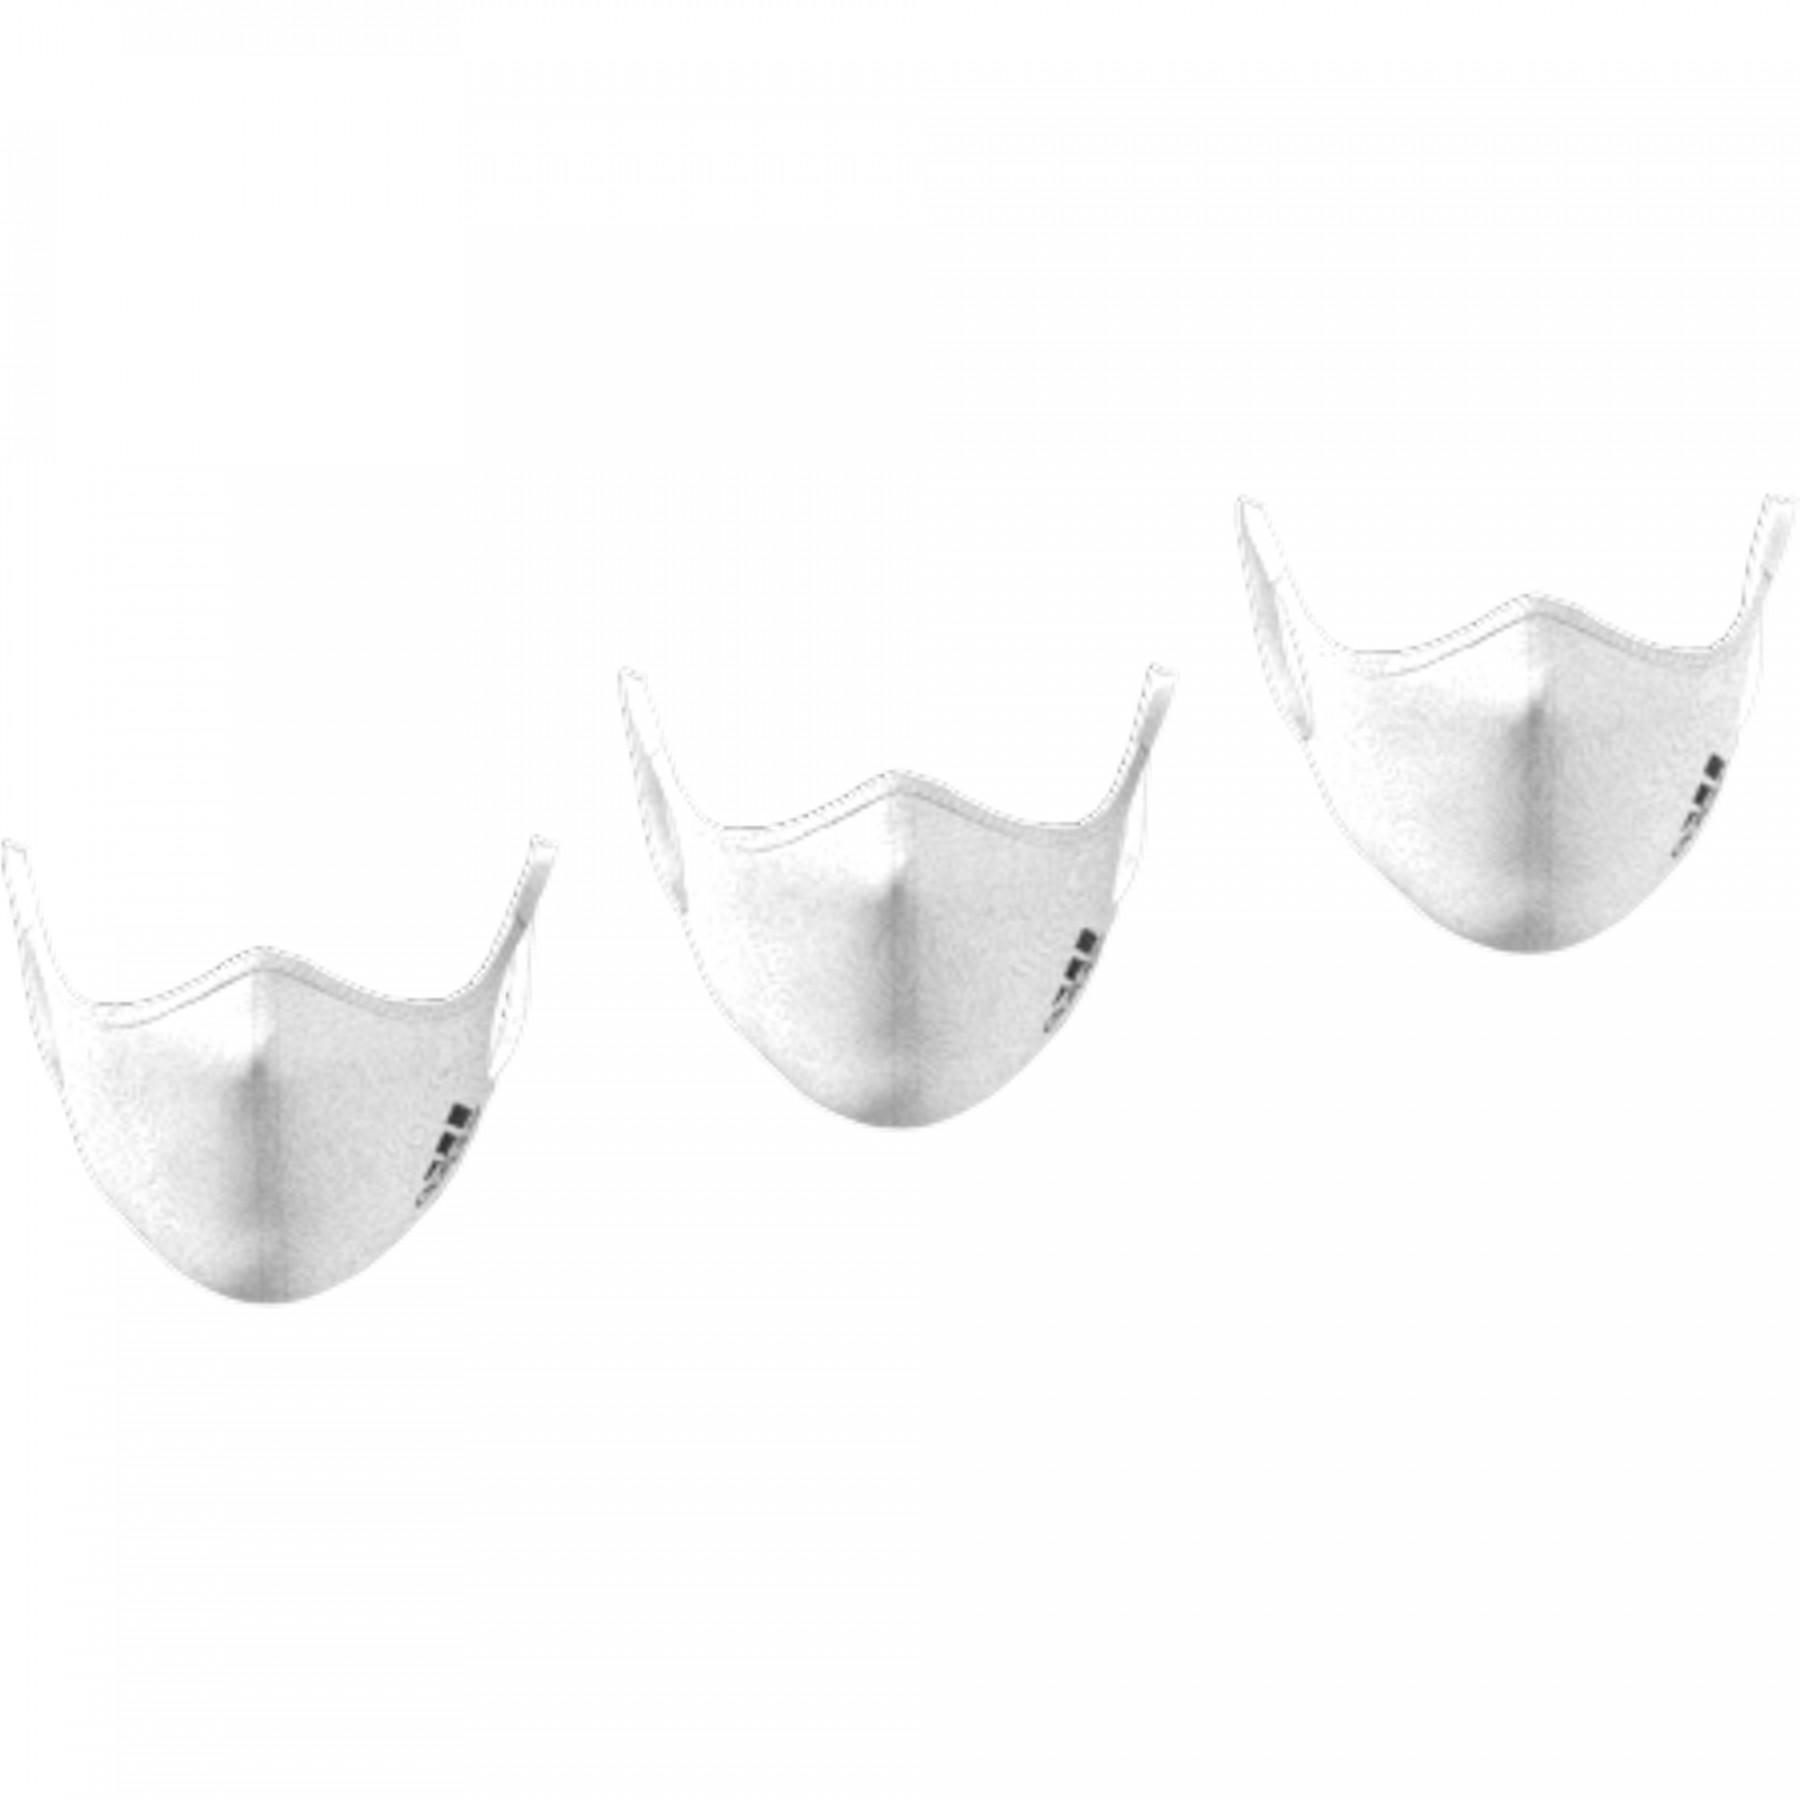 Masken adidas XS/S (x3)